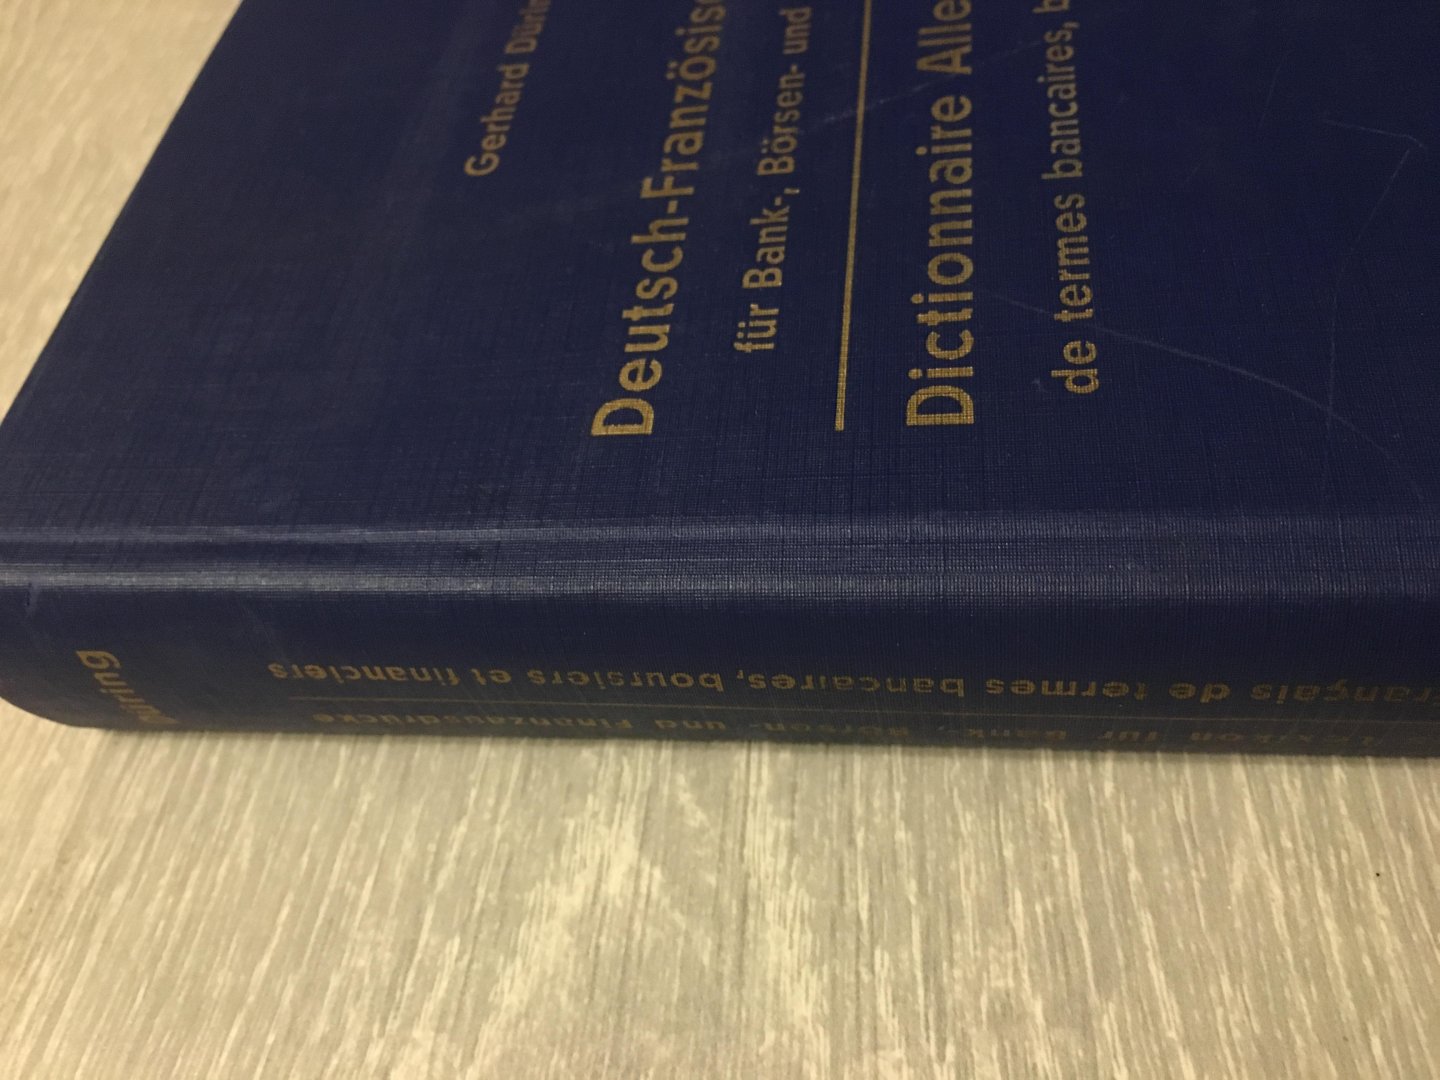 Düring, Gerhard - Deutsch-französisches Lexikon Für Bank-, Börsen- Und Finanzausdrücke / Dictionnaire Allemand-français De Termes Bancaires, Boursiers Et Financiers